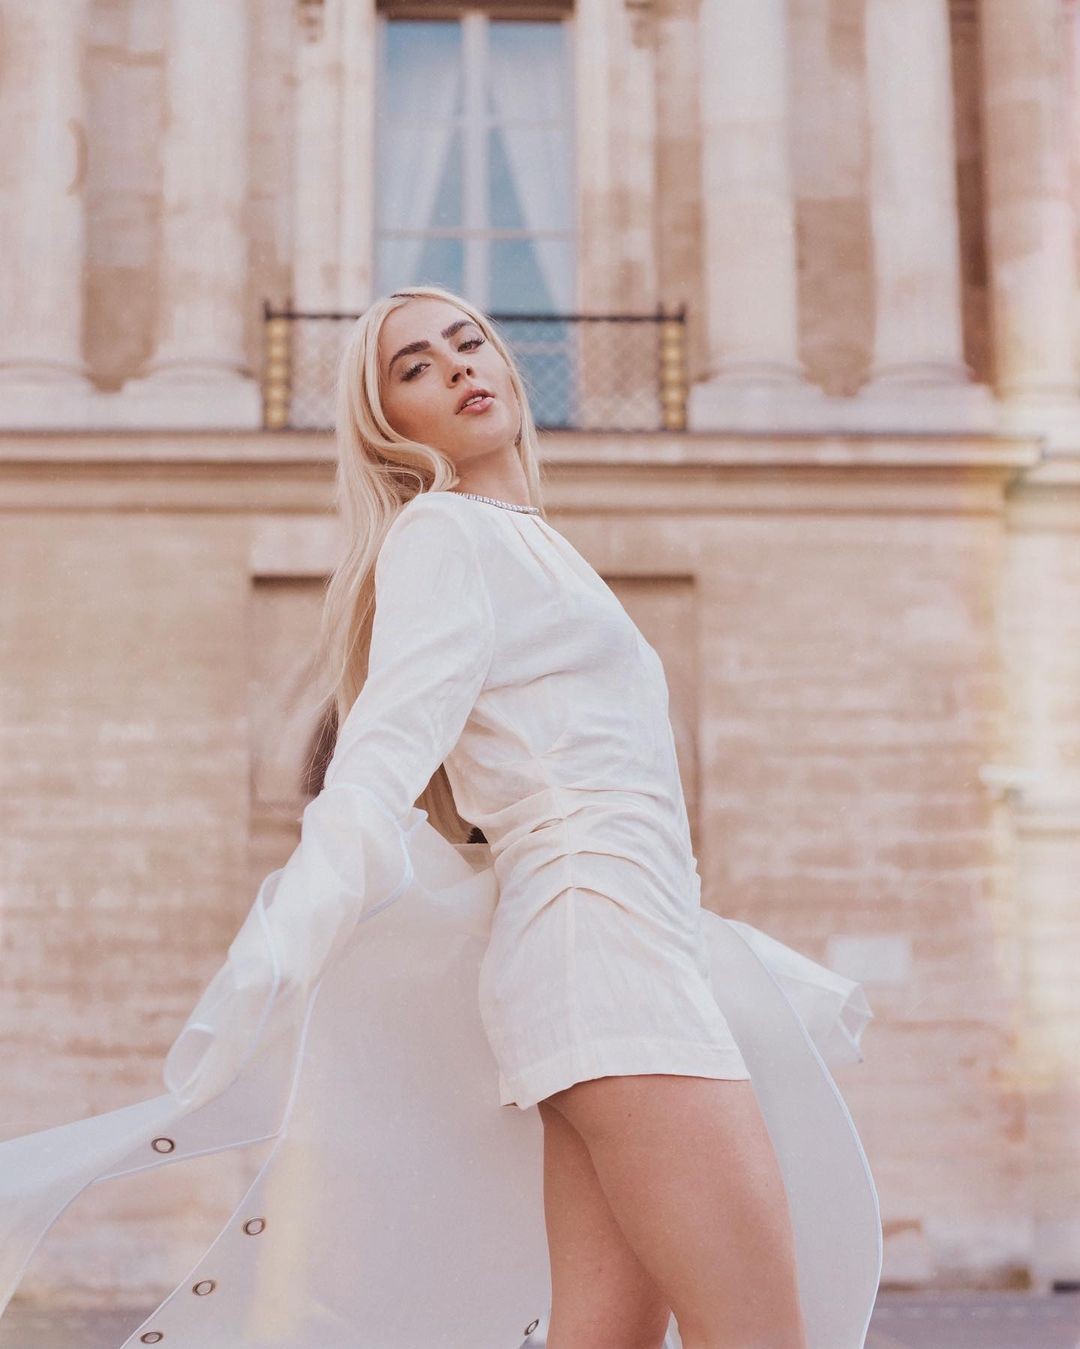 Jade Picon com visual minimalista branco (Foto: Reprodução Instagram)